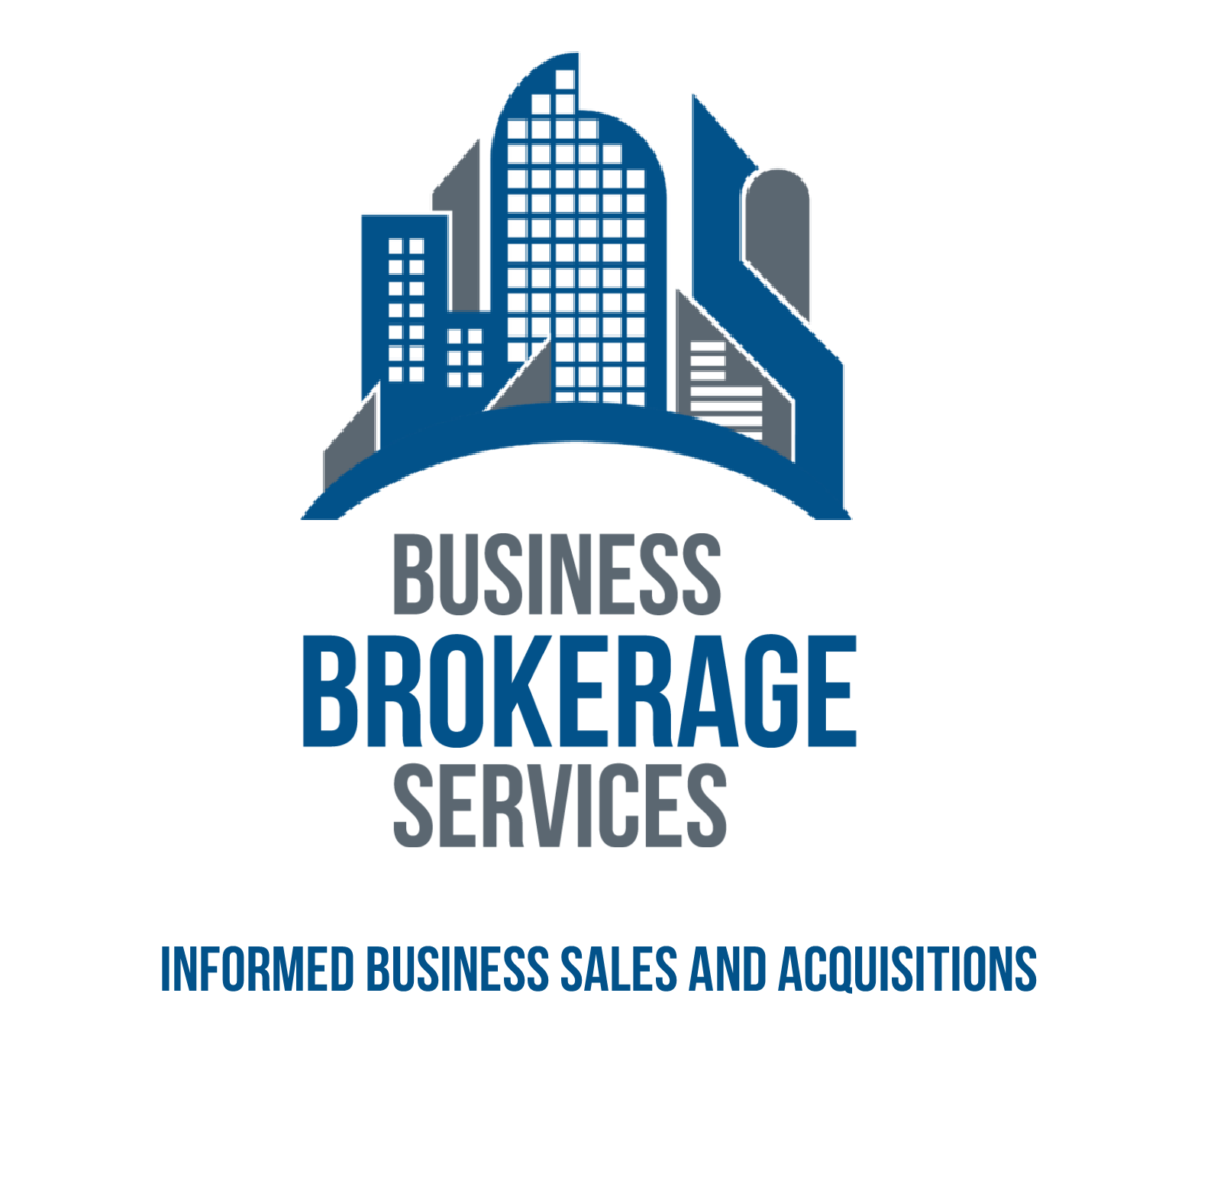 A brokerage real estate